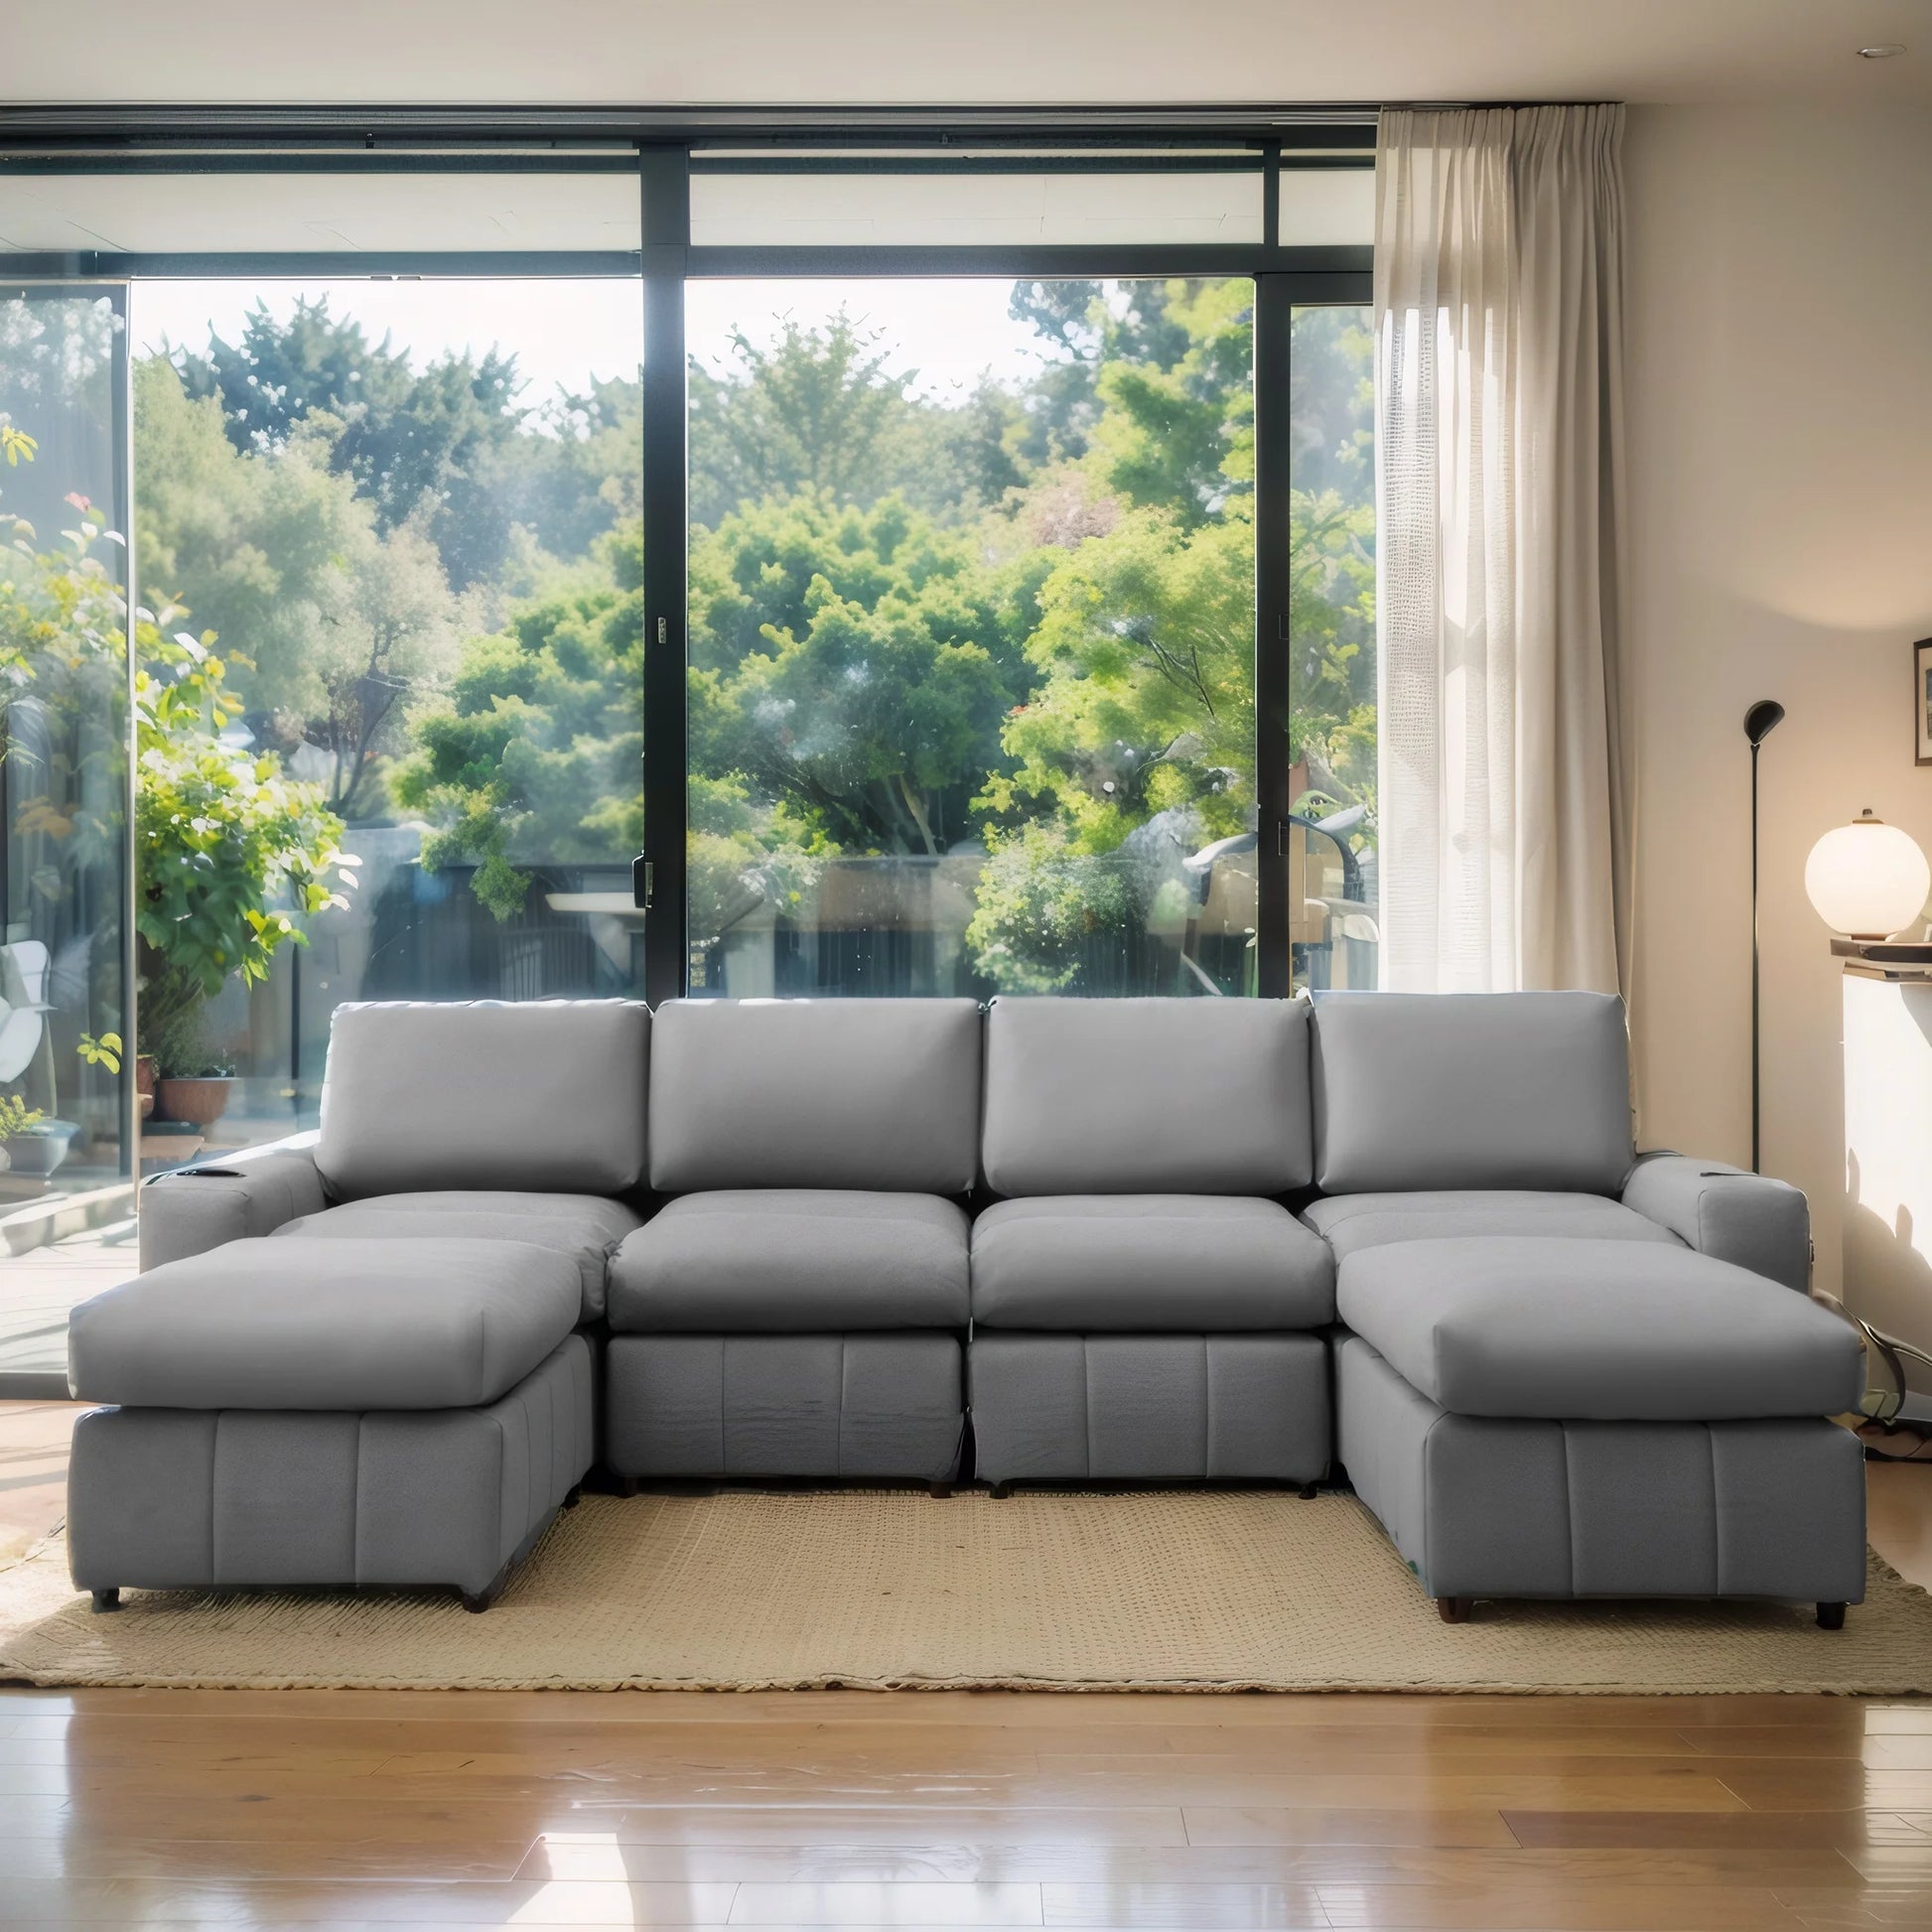 Modular Sectional Sofa, U Shaped Sofa with Ottomans, Large Living Room Furnitures, Light Grey